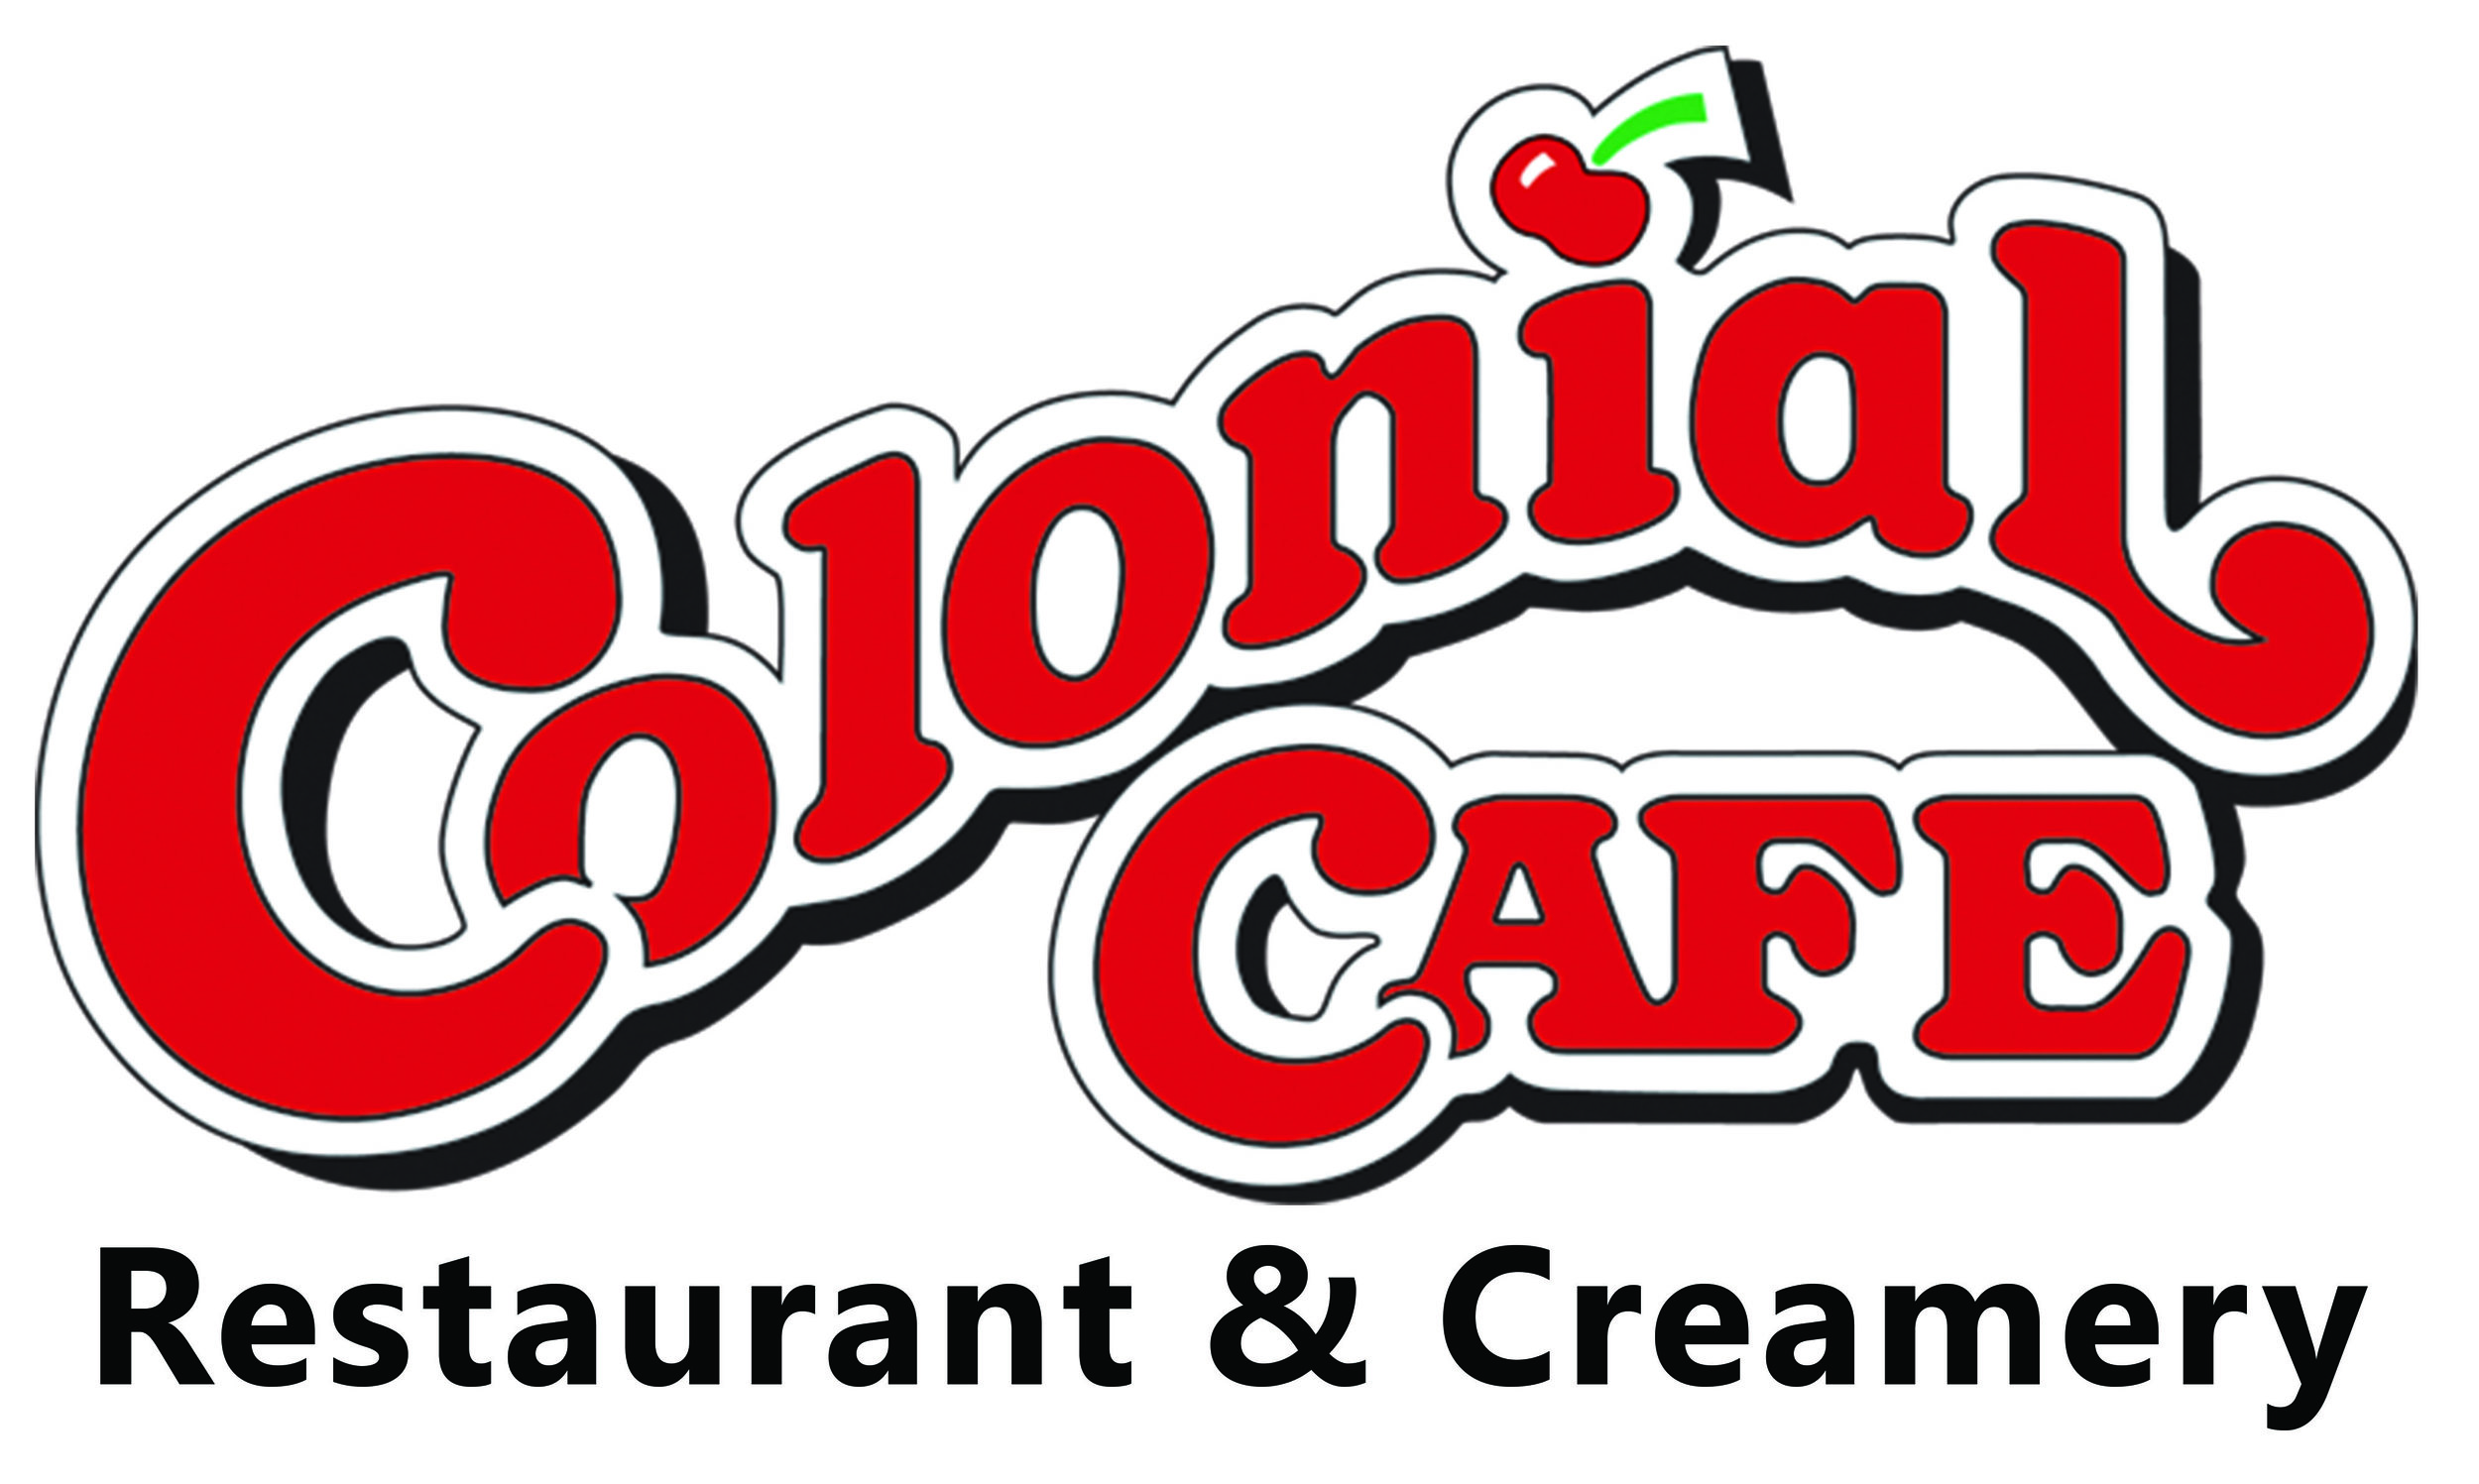 Colonial Cafe Restaurant & Creamery.jpg